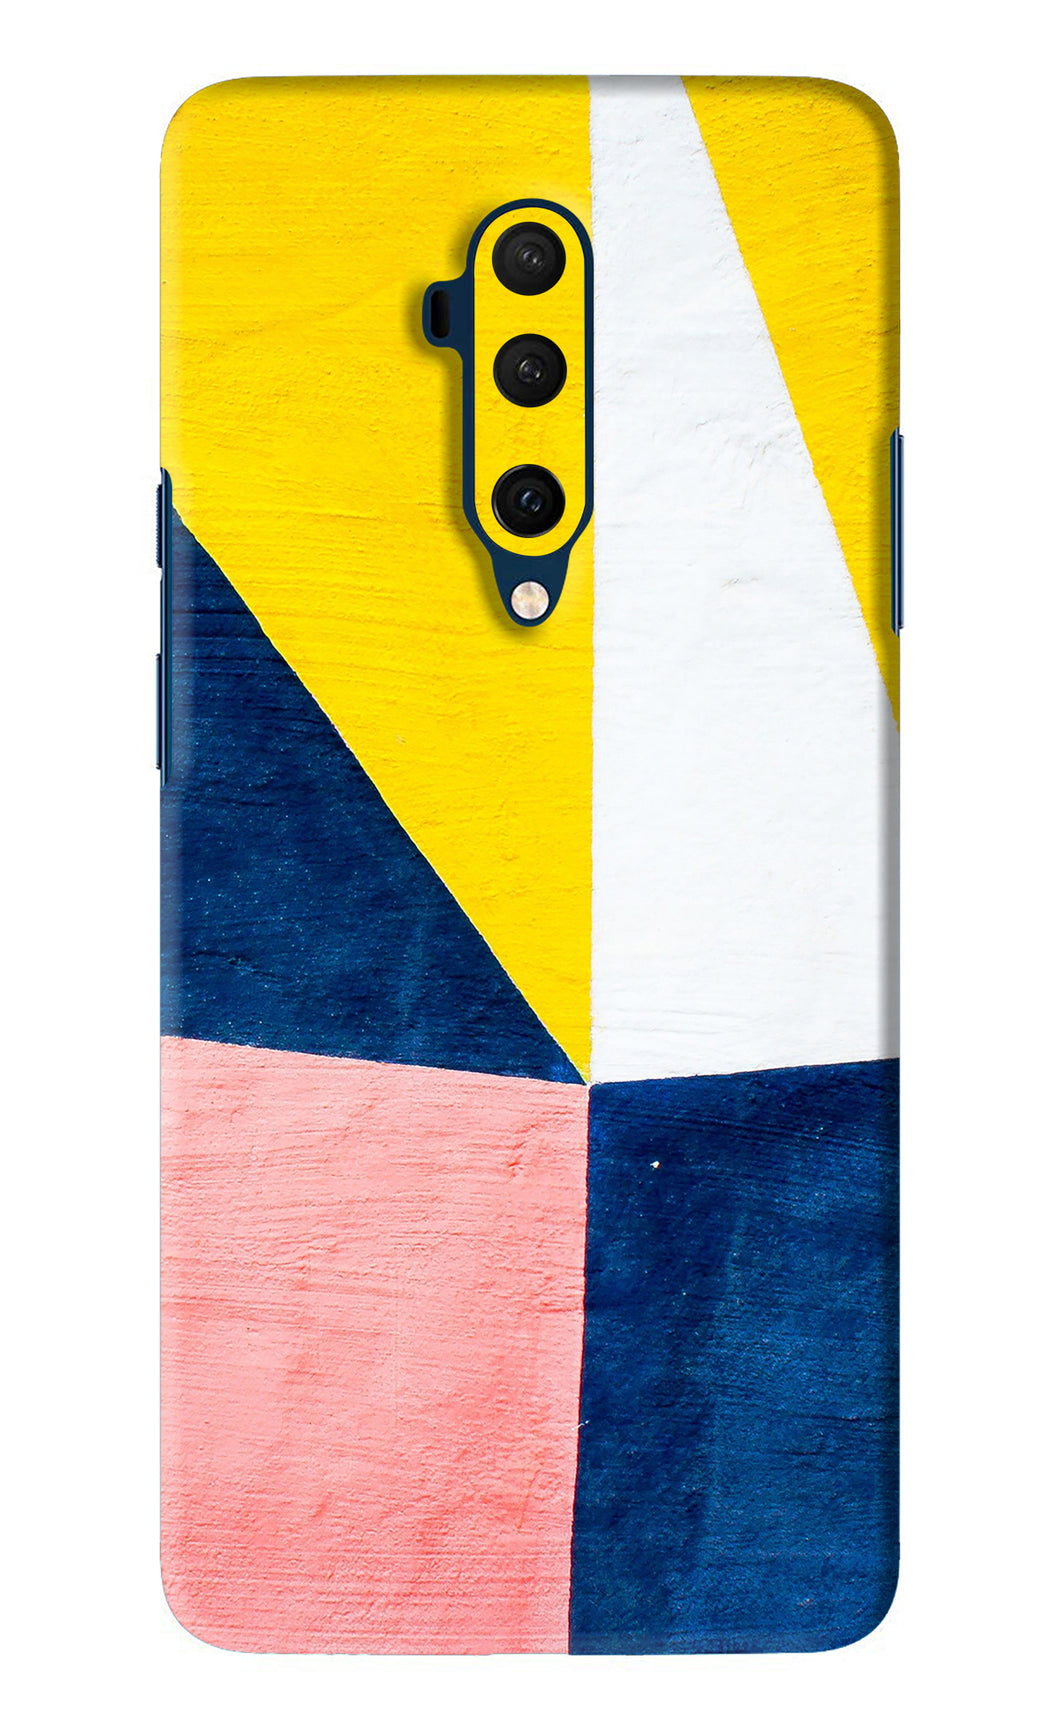 Colourful Art OnePlus 7T Pro Back Skin Wrap